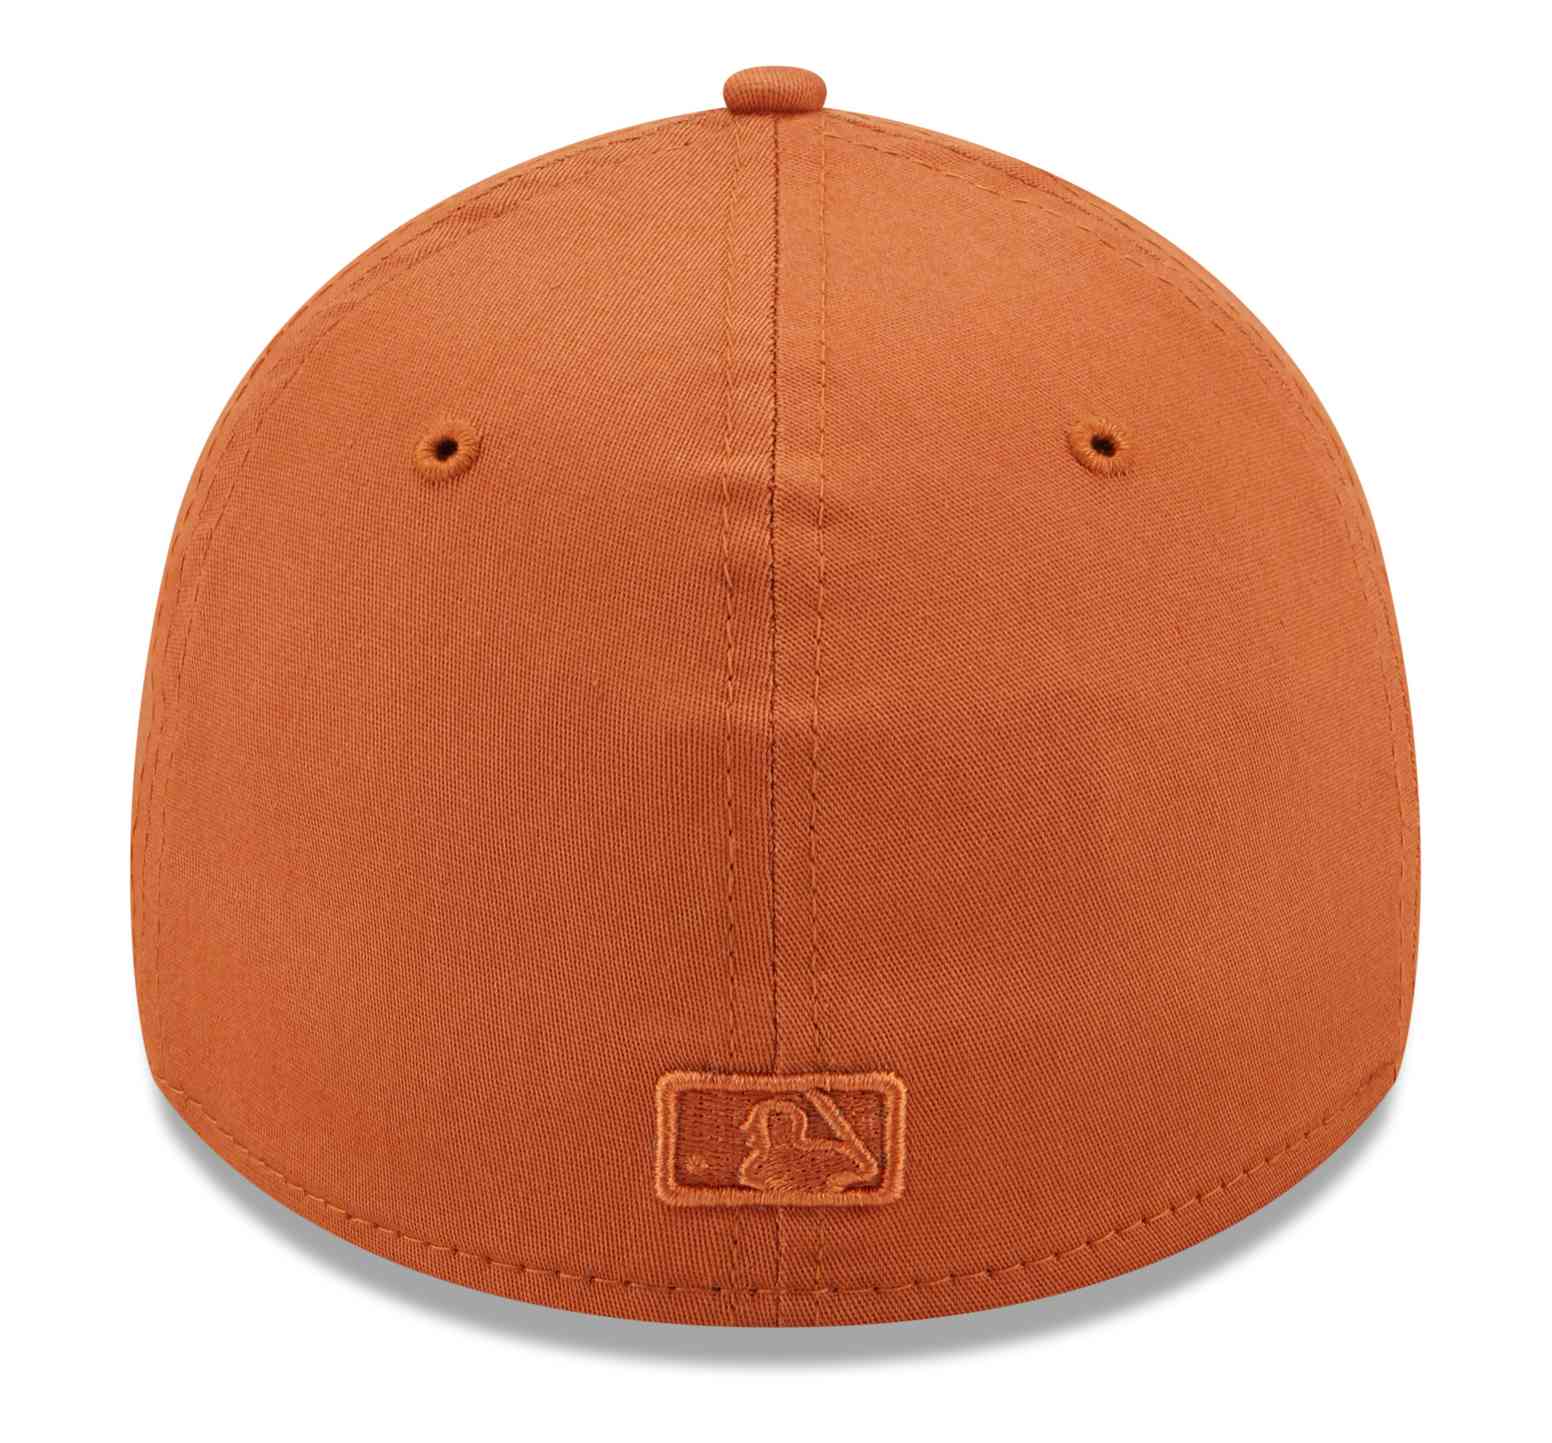 New Era - MLB New York Yankees League Essential 39Thirty Stretch Cap